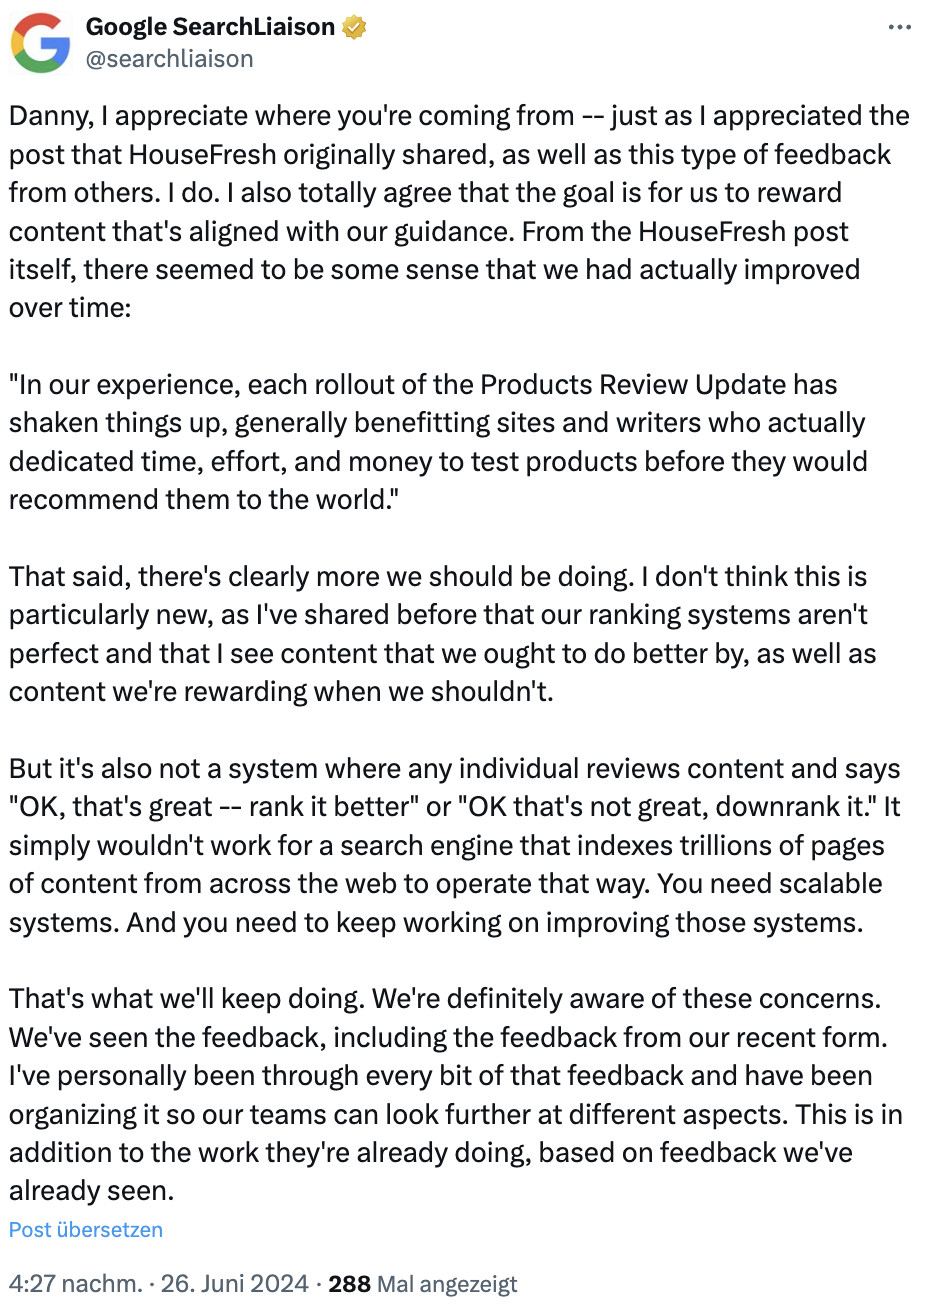 Google: Reaktion auf Kritik zu Reviews Rankings